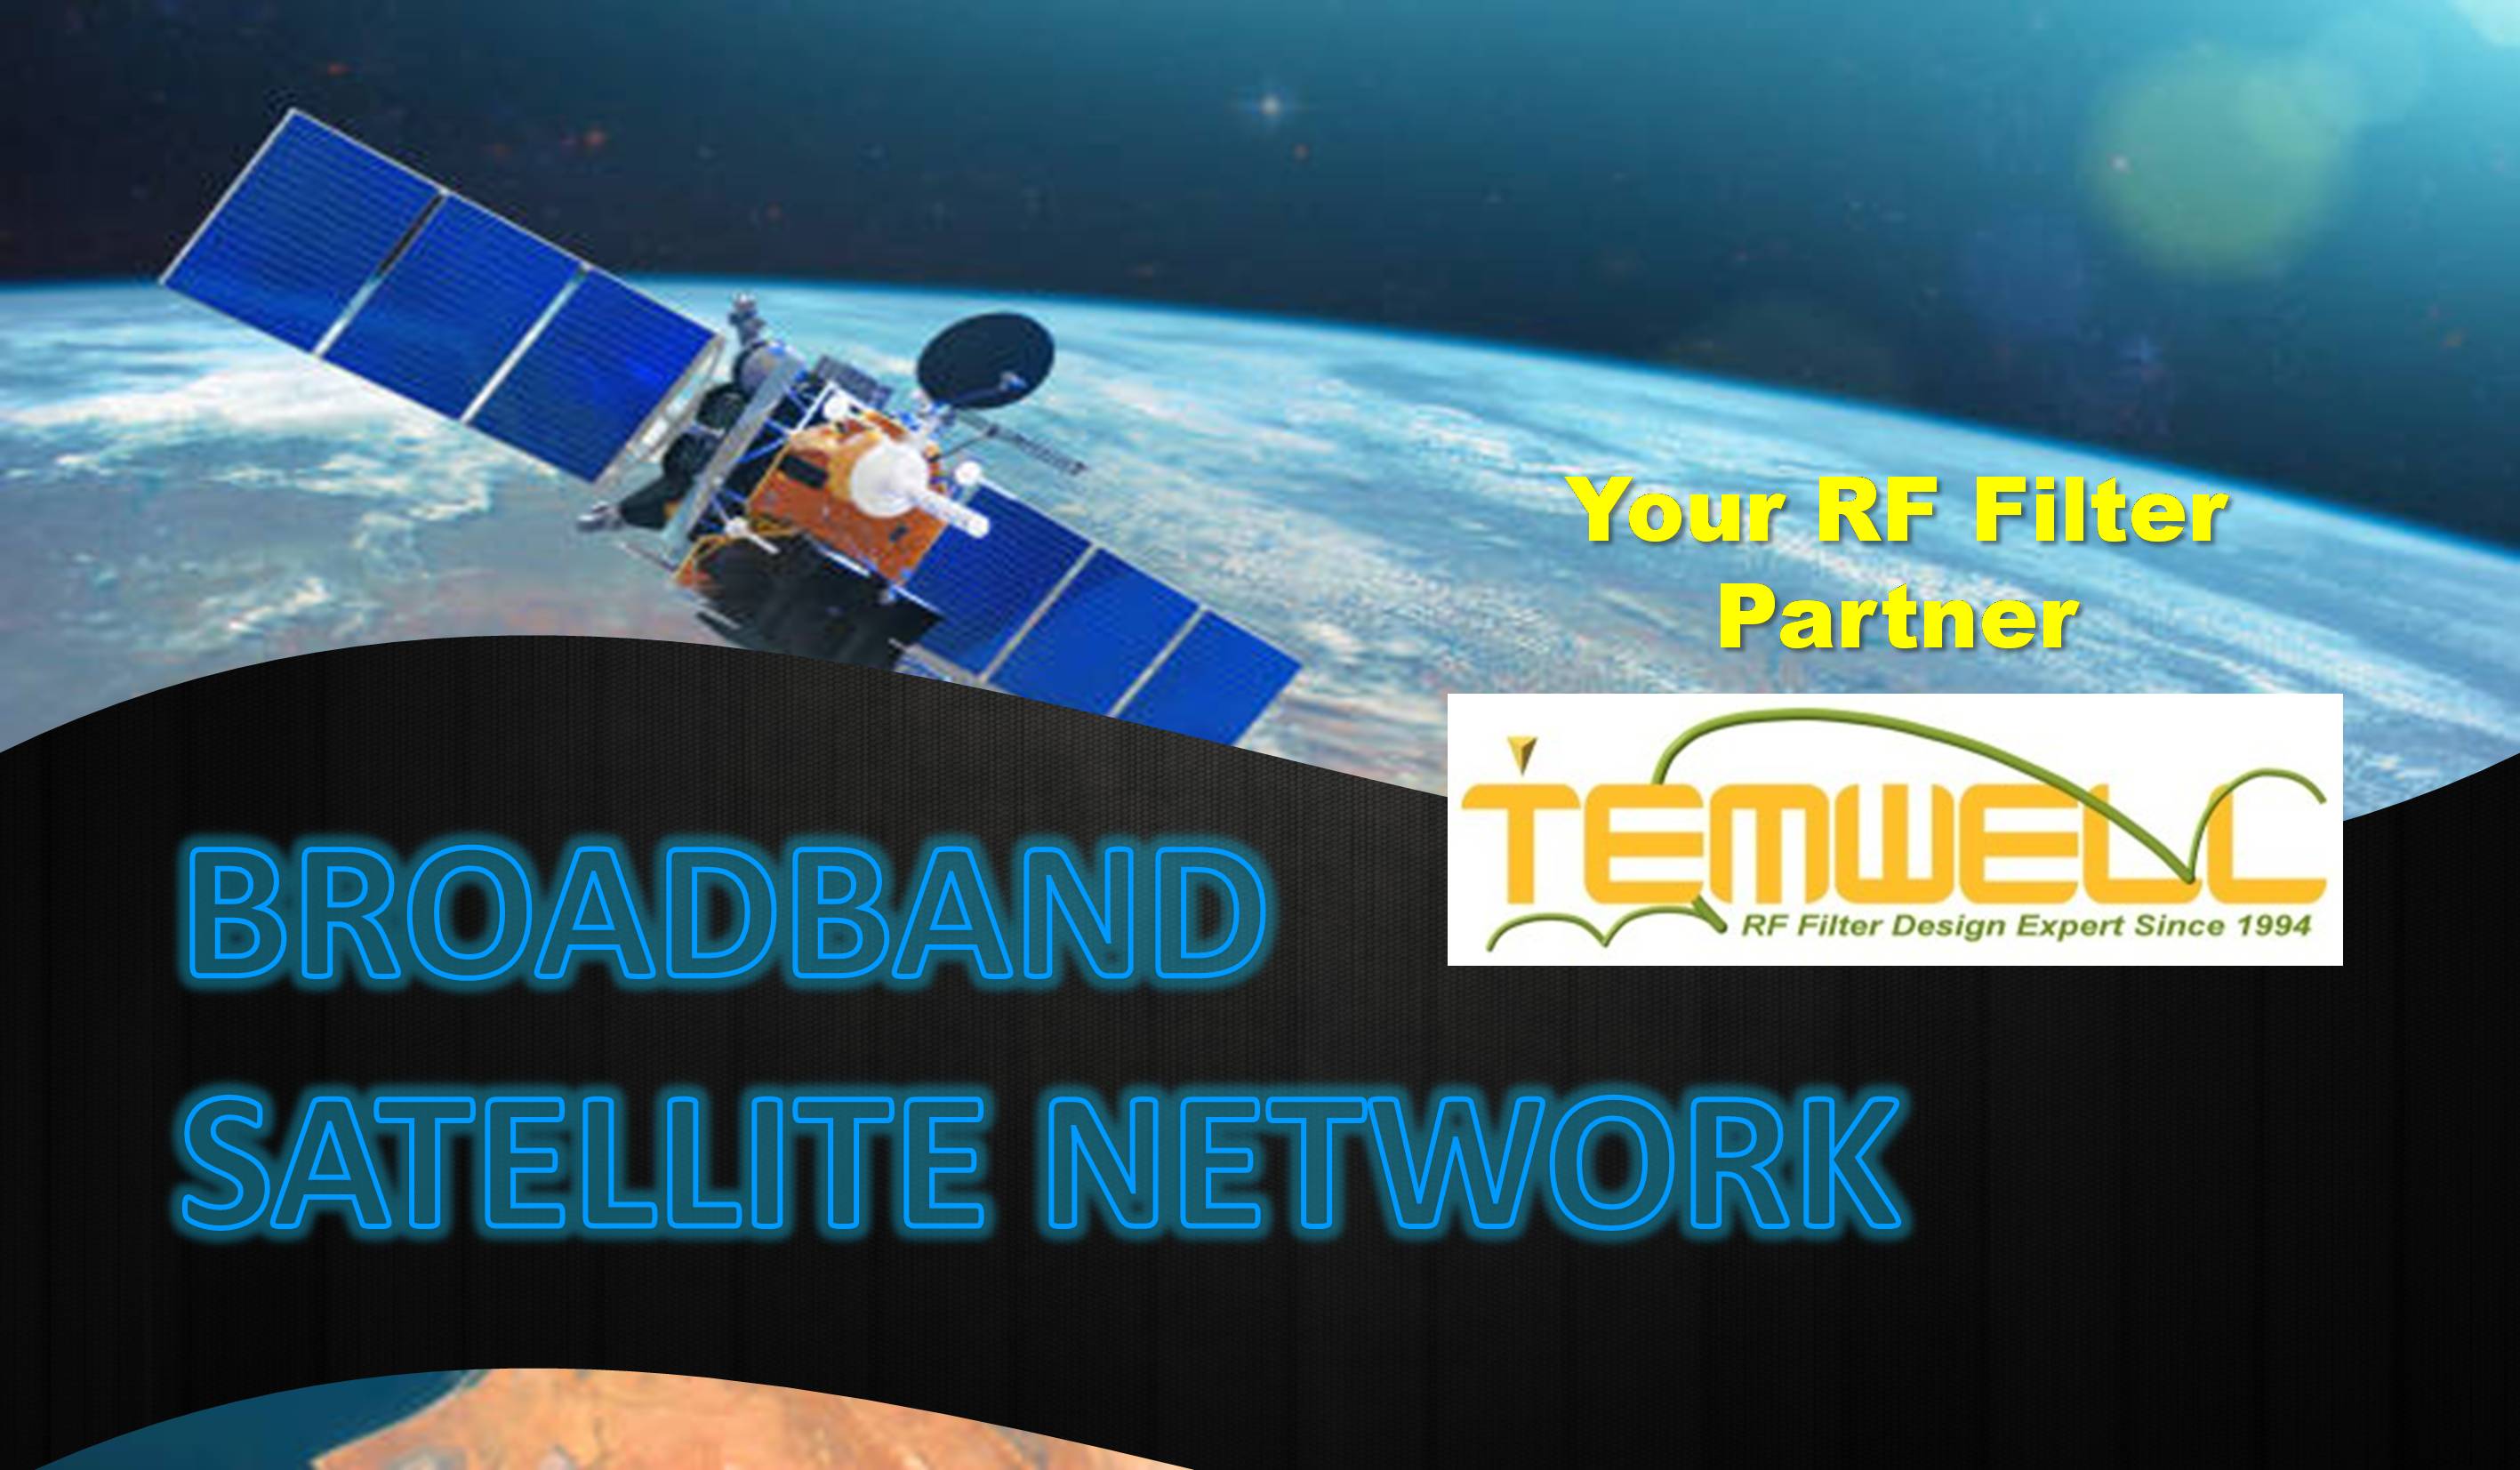 proimages/featured/k-band-broadband-satellite-network/k-band-broadband-satellite-network4.jpg